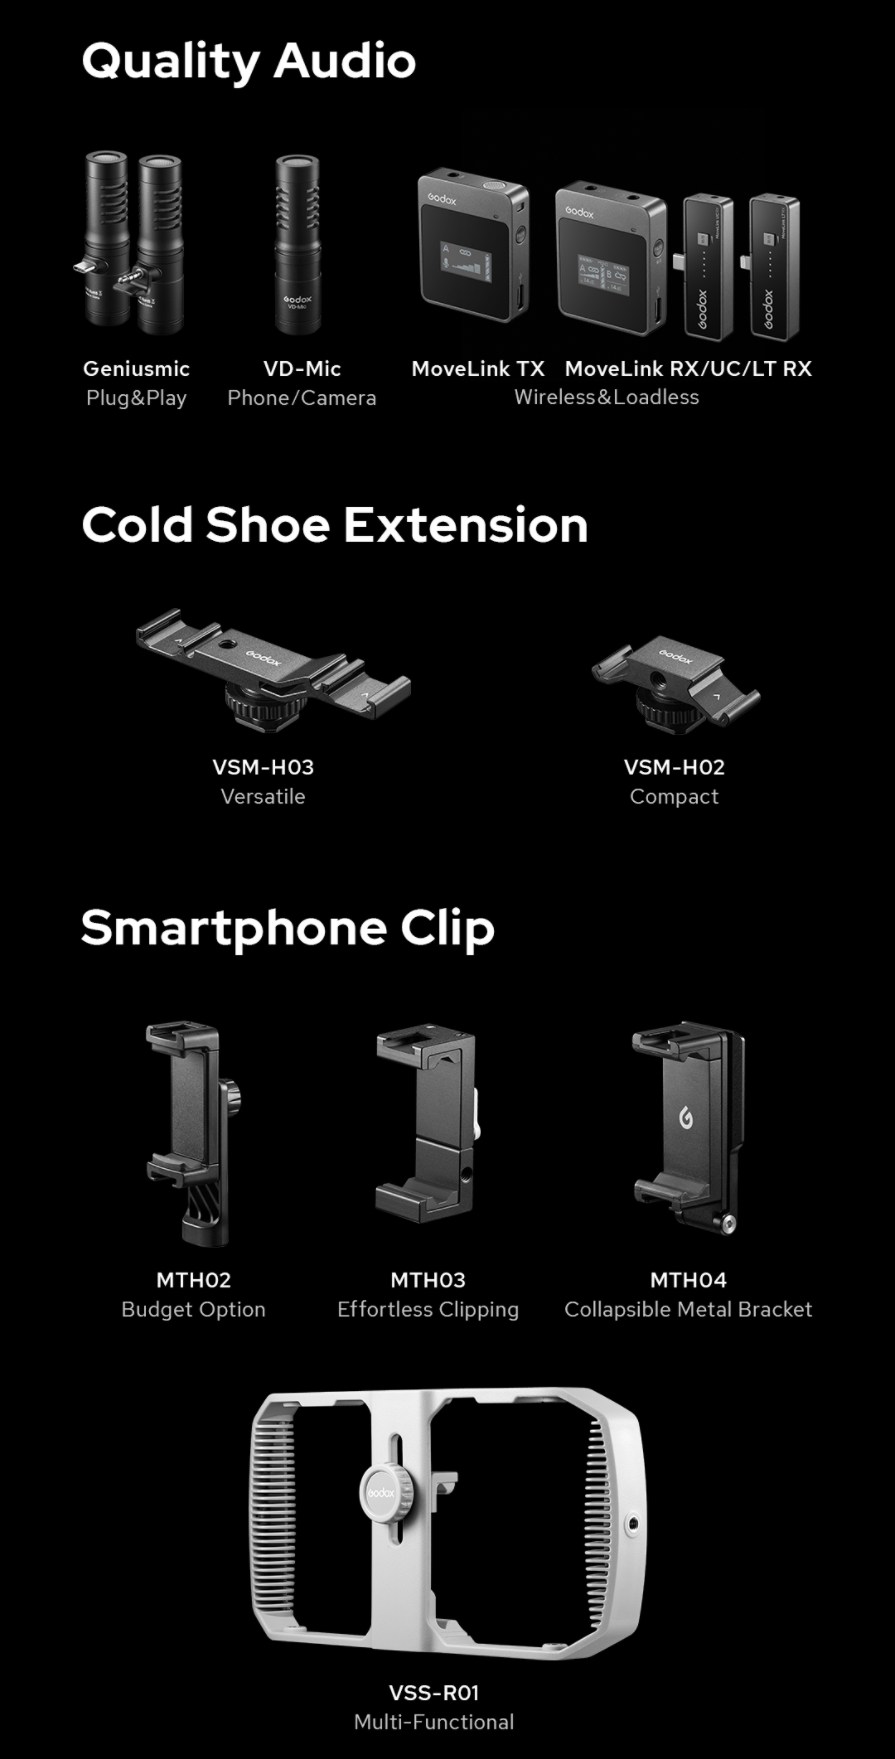 Quality Audio, Cold shoe extension, smartphone clip